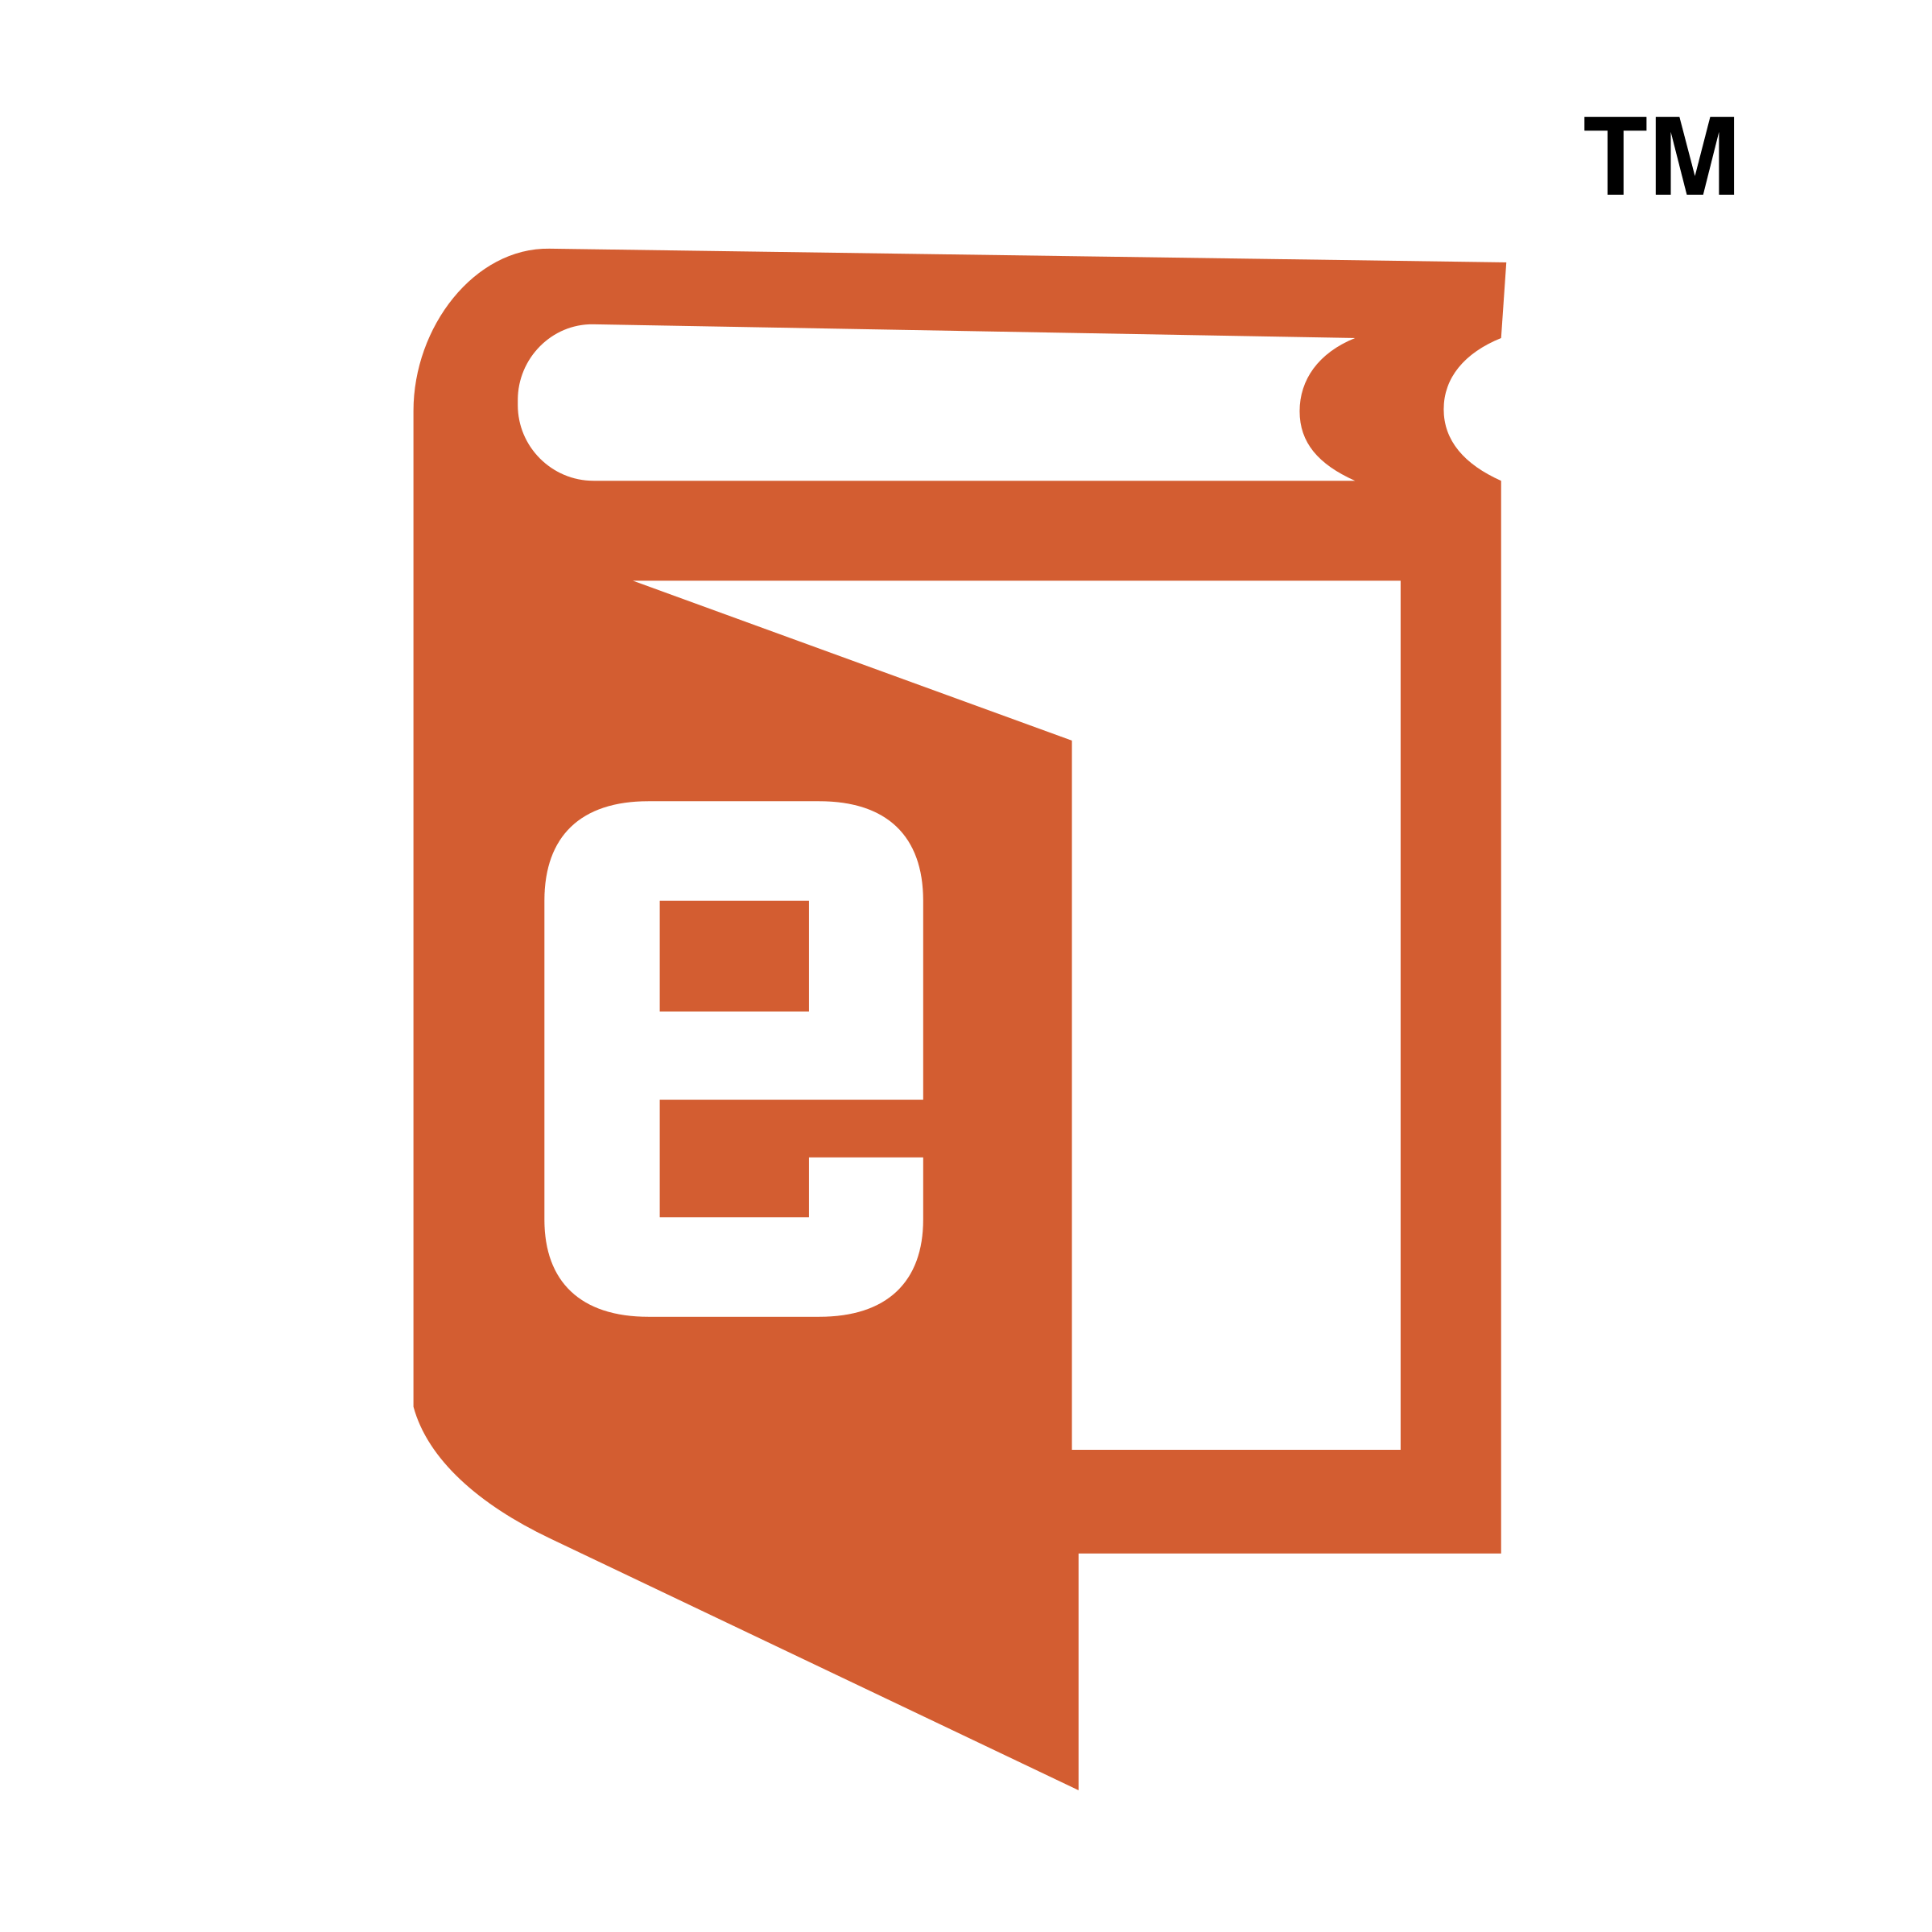 Ebook Logo - eBook Logo PNG Transparent & SVG Vector - Freebie Supply